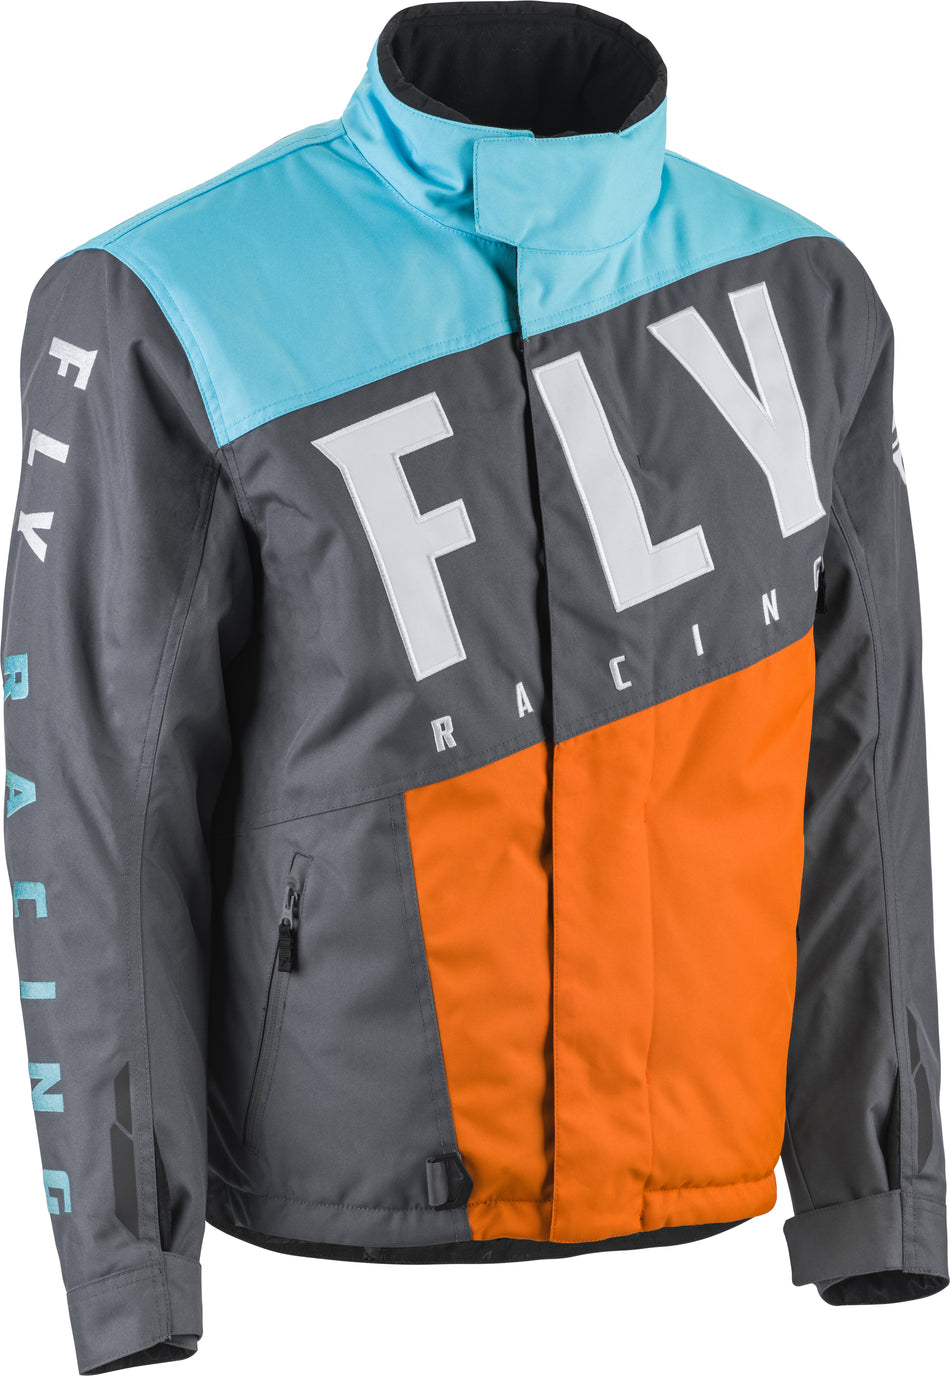 FLY RACING Youth Snx Pro Jacket Orange/Light Blue/Black Yxs 470-4114YXS